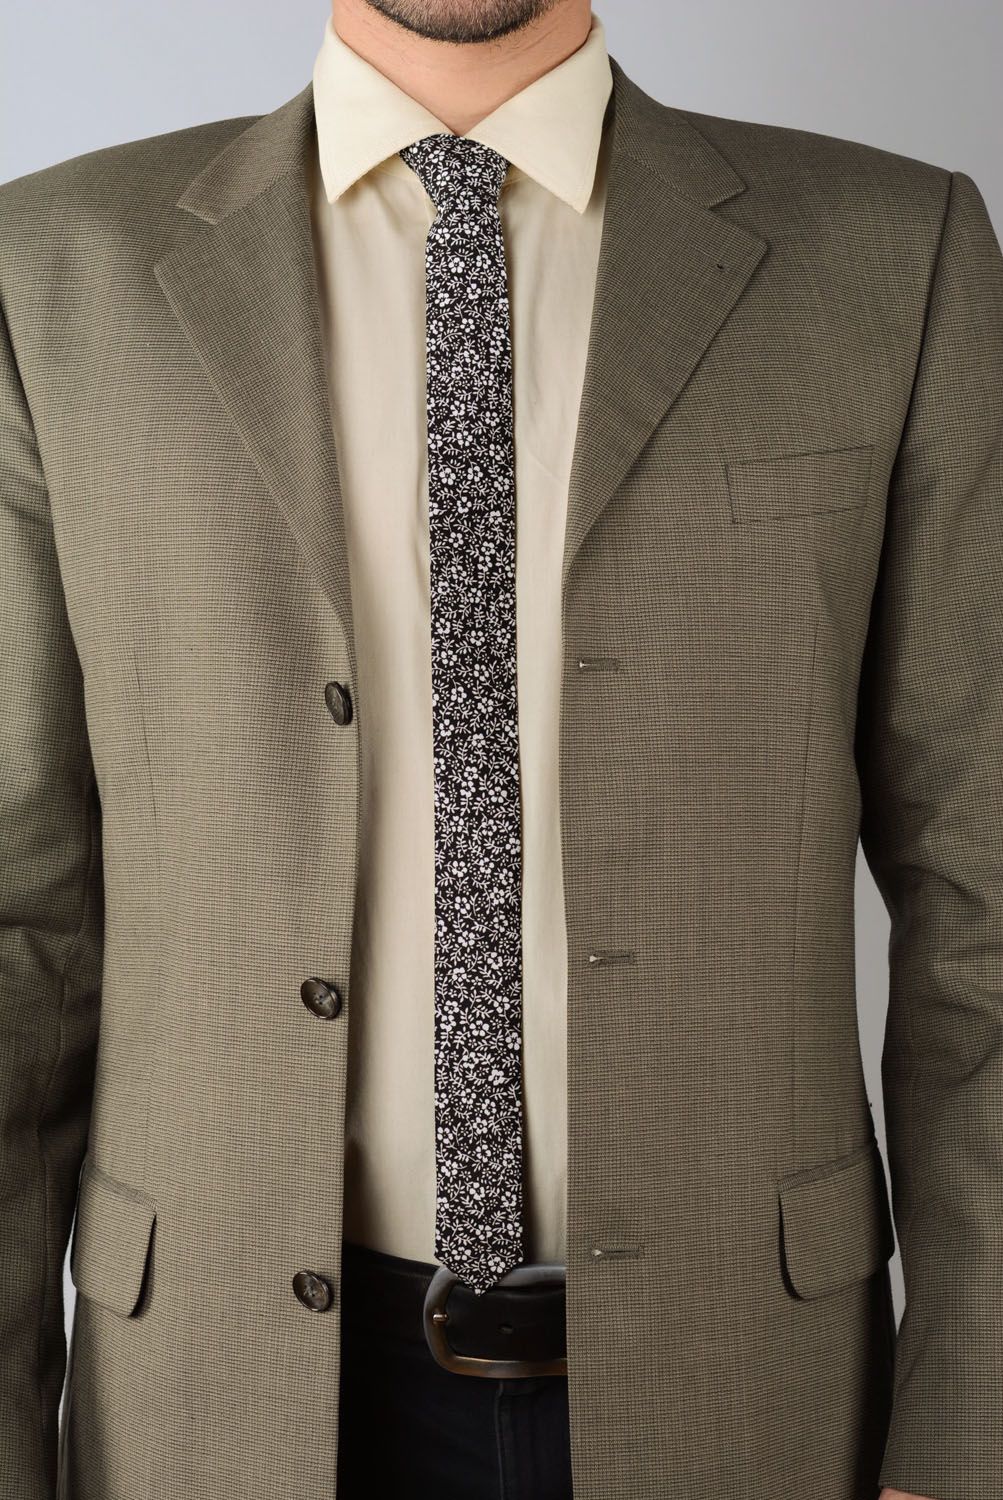 Cravate en coton faite main originale photo 1